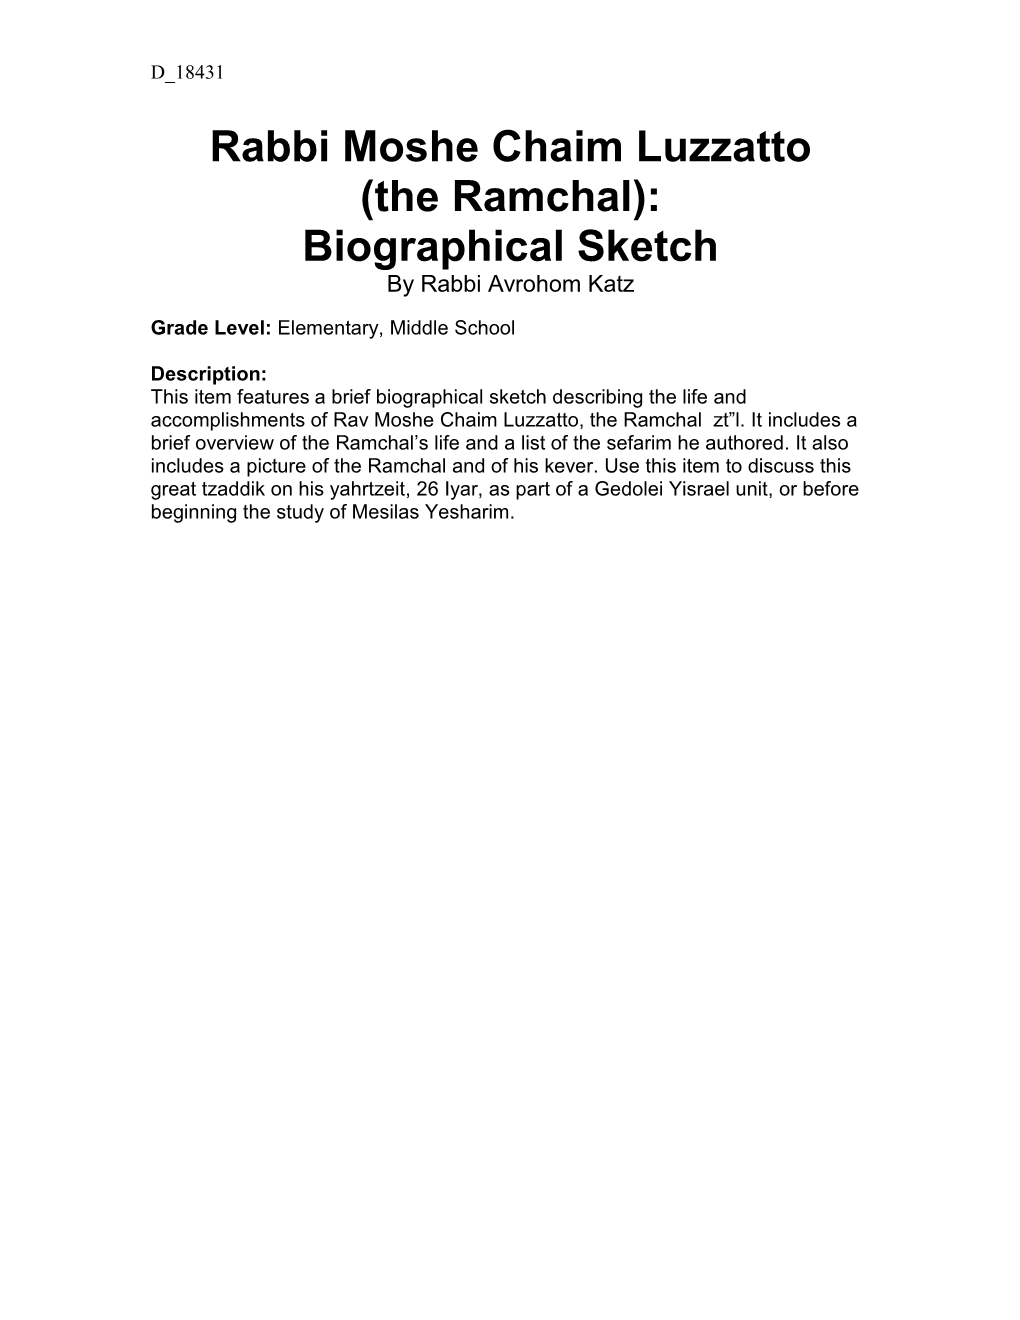 Rabbi Moshe Chaim Luzzatto (The Ramchal): Biographical Sketch by Rabbi Avrohom Katz